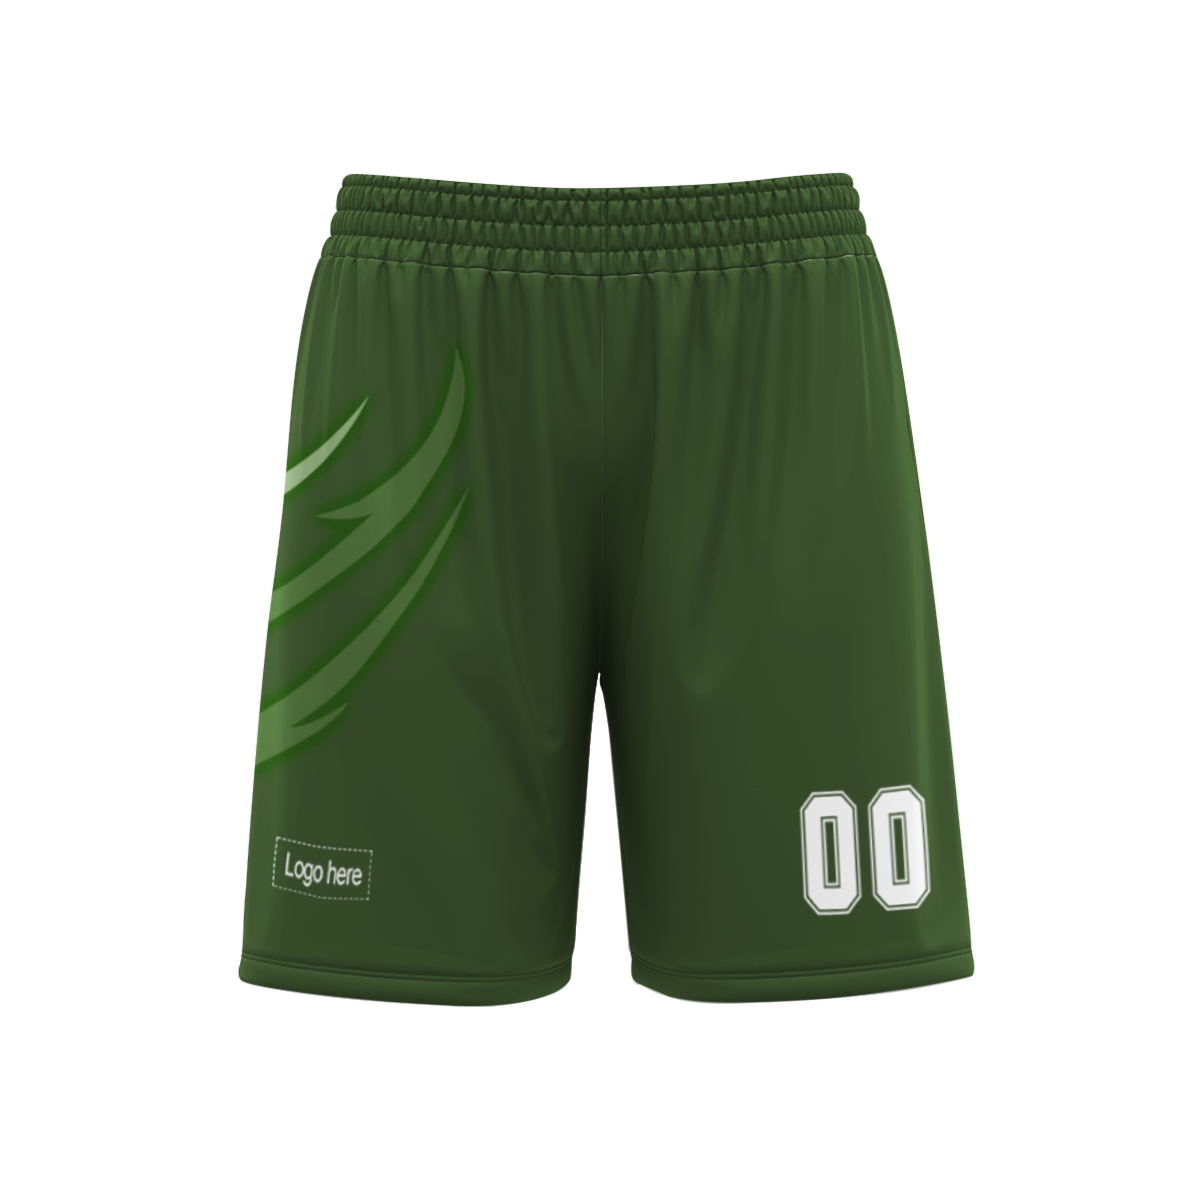 factory-oem-service-custom-basketball-uniforms-printed-sport-clothes-summer-basketball-jerseys-at-cj-pod-7